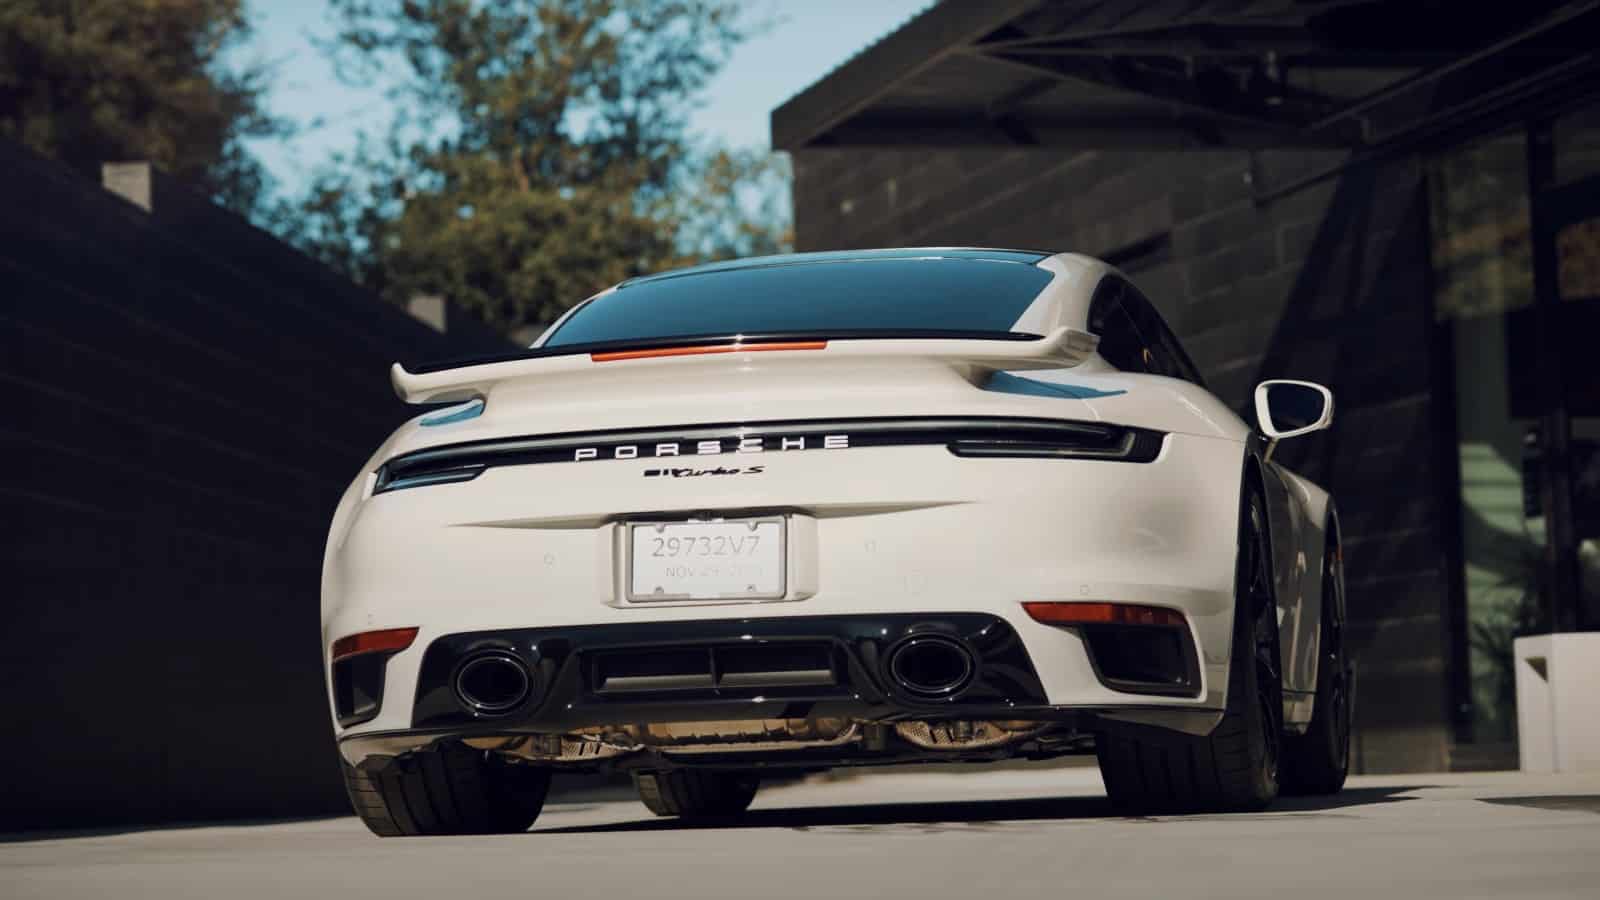 Nadeshot's new 2022 Porsche